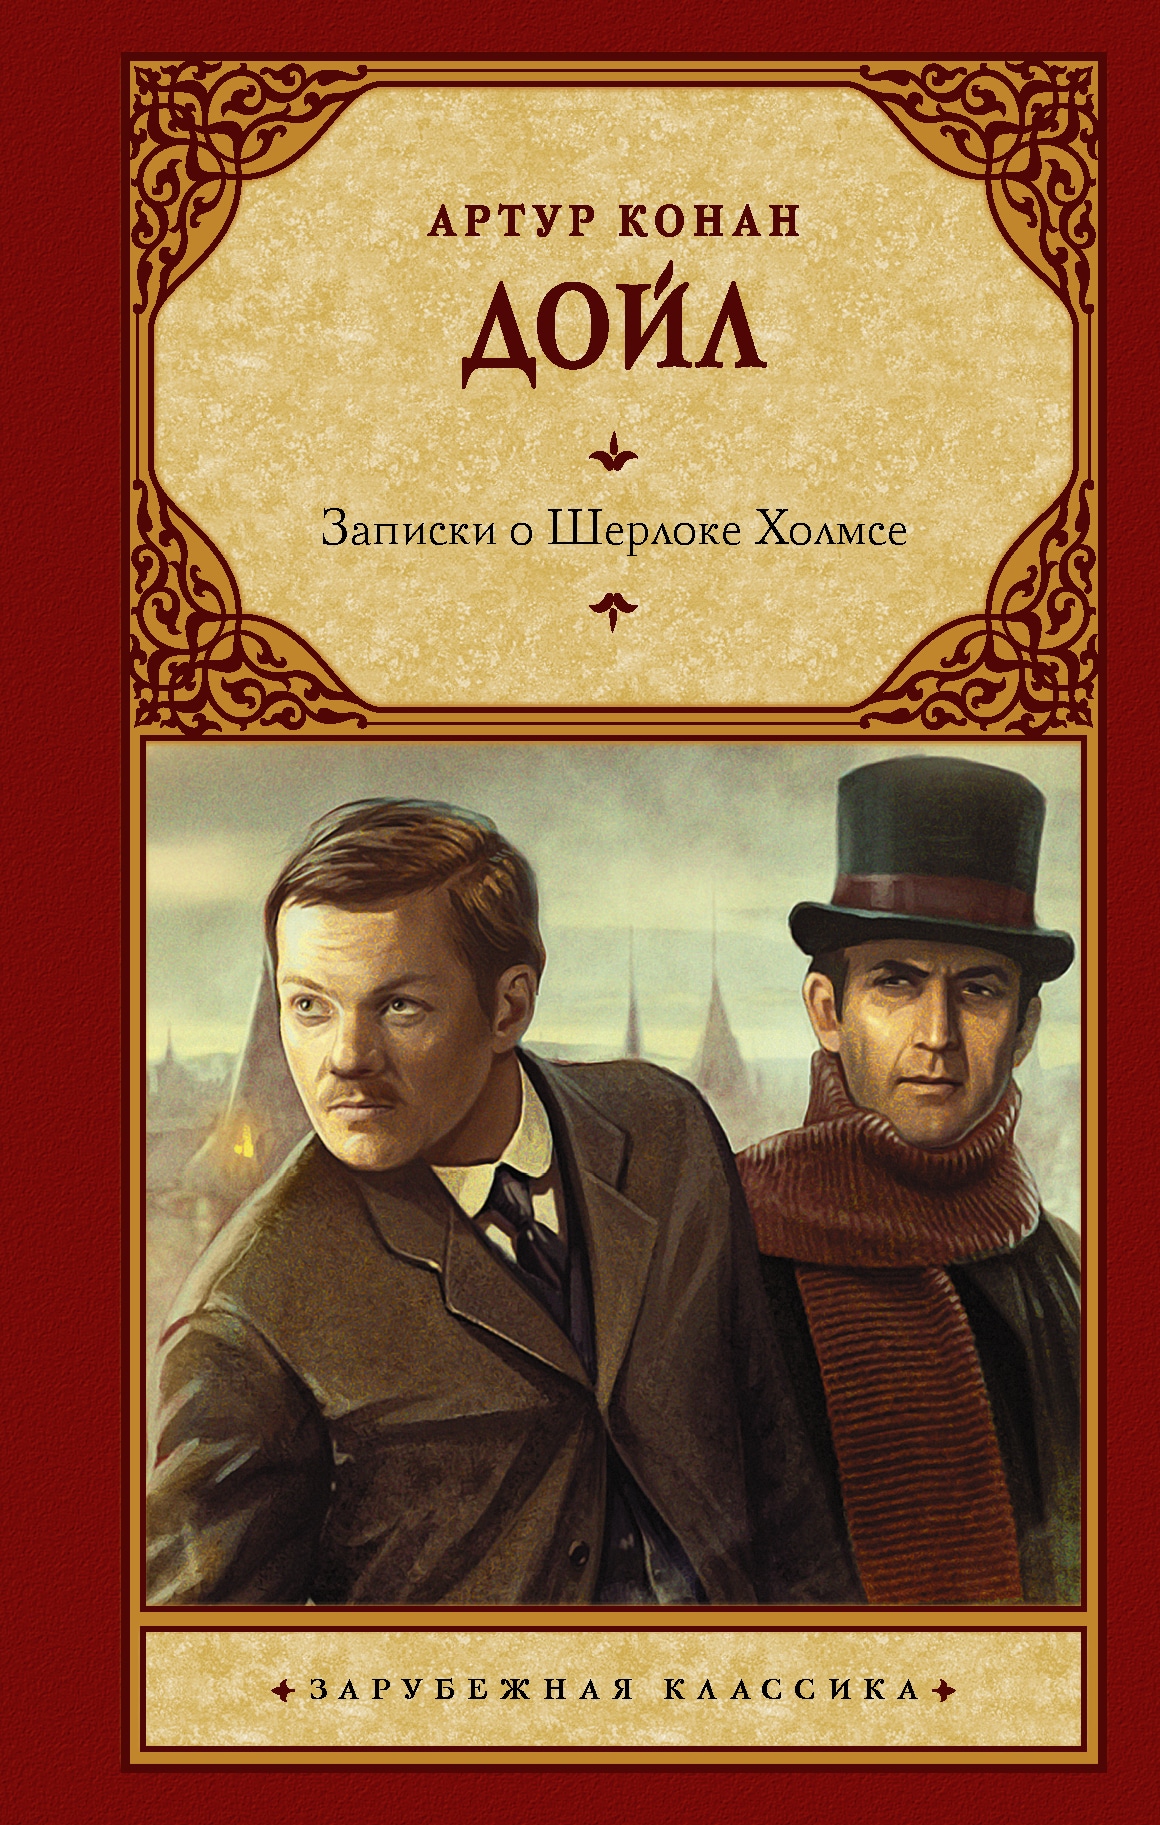 Book “Записки о Шерлоке Холмсе” by Дойл Артур Конан — 2022